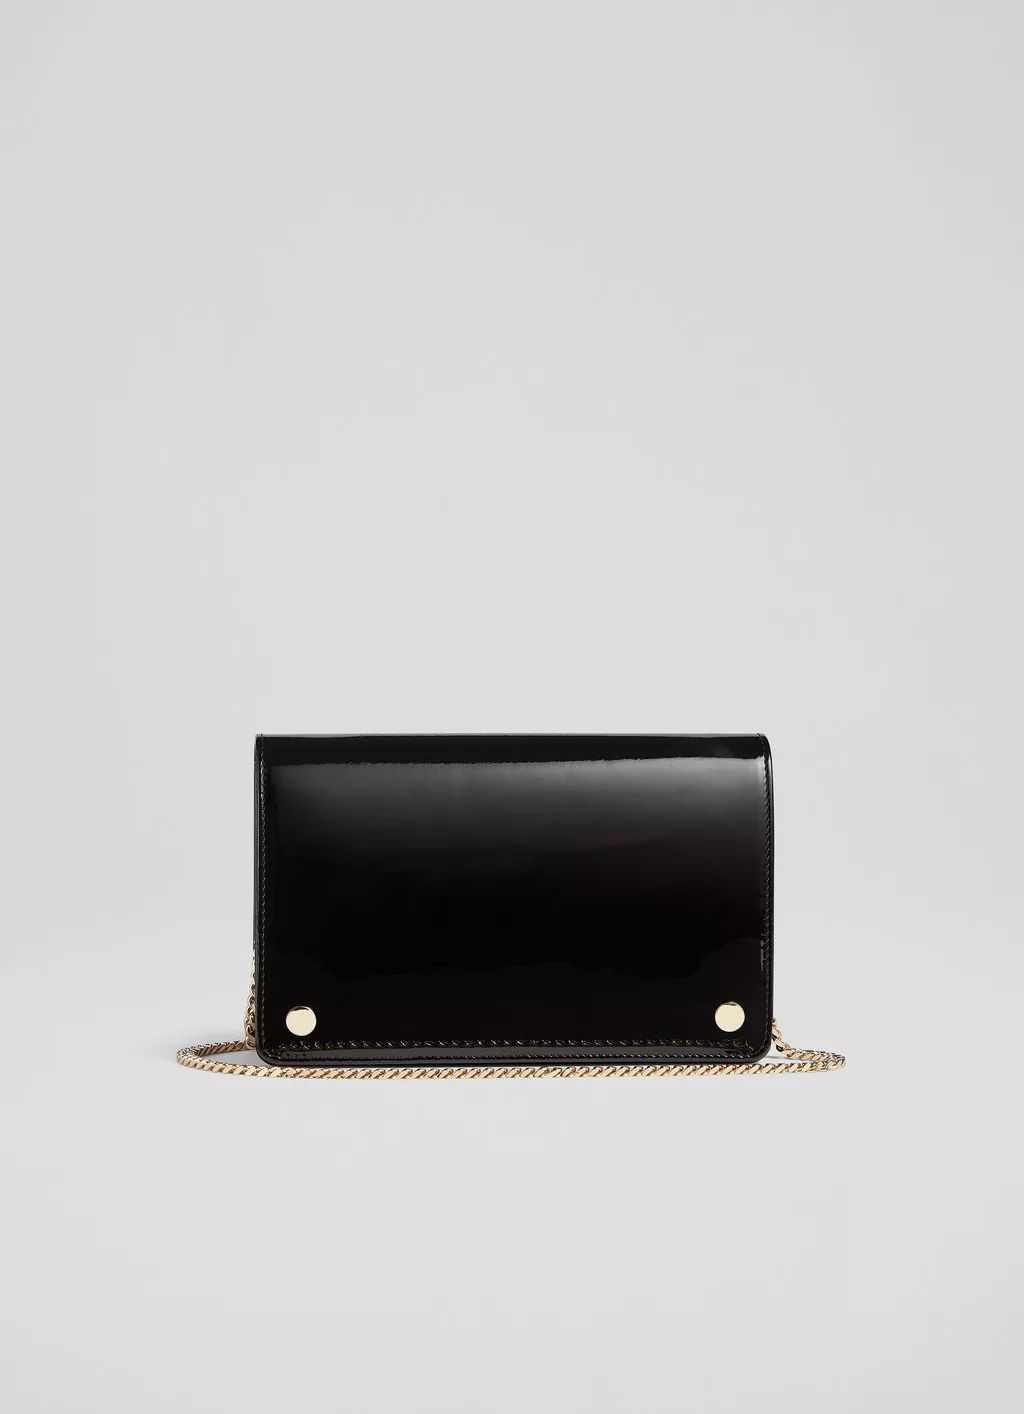 Cici Black Patent Leather Clutch Bag | L.K. Bennett (UK)